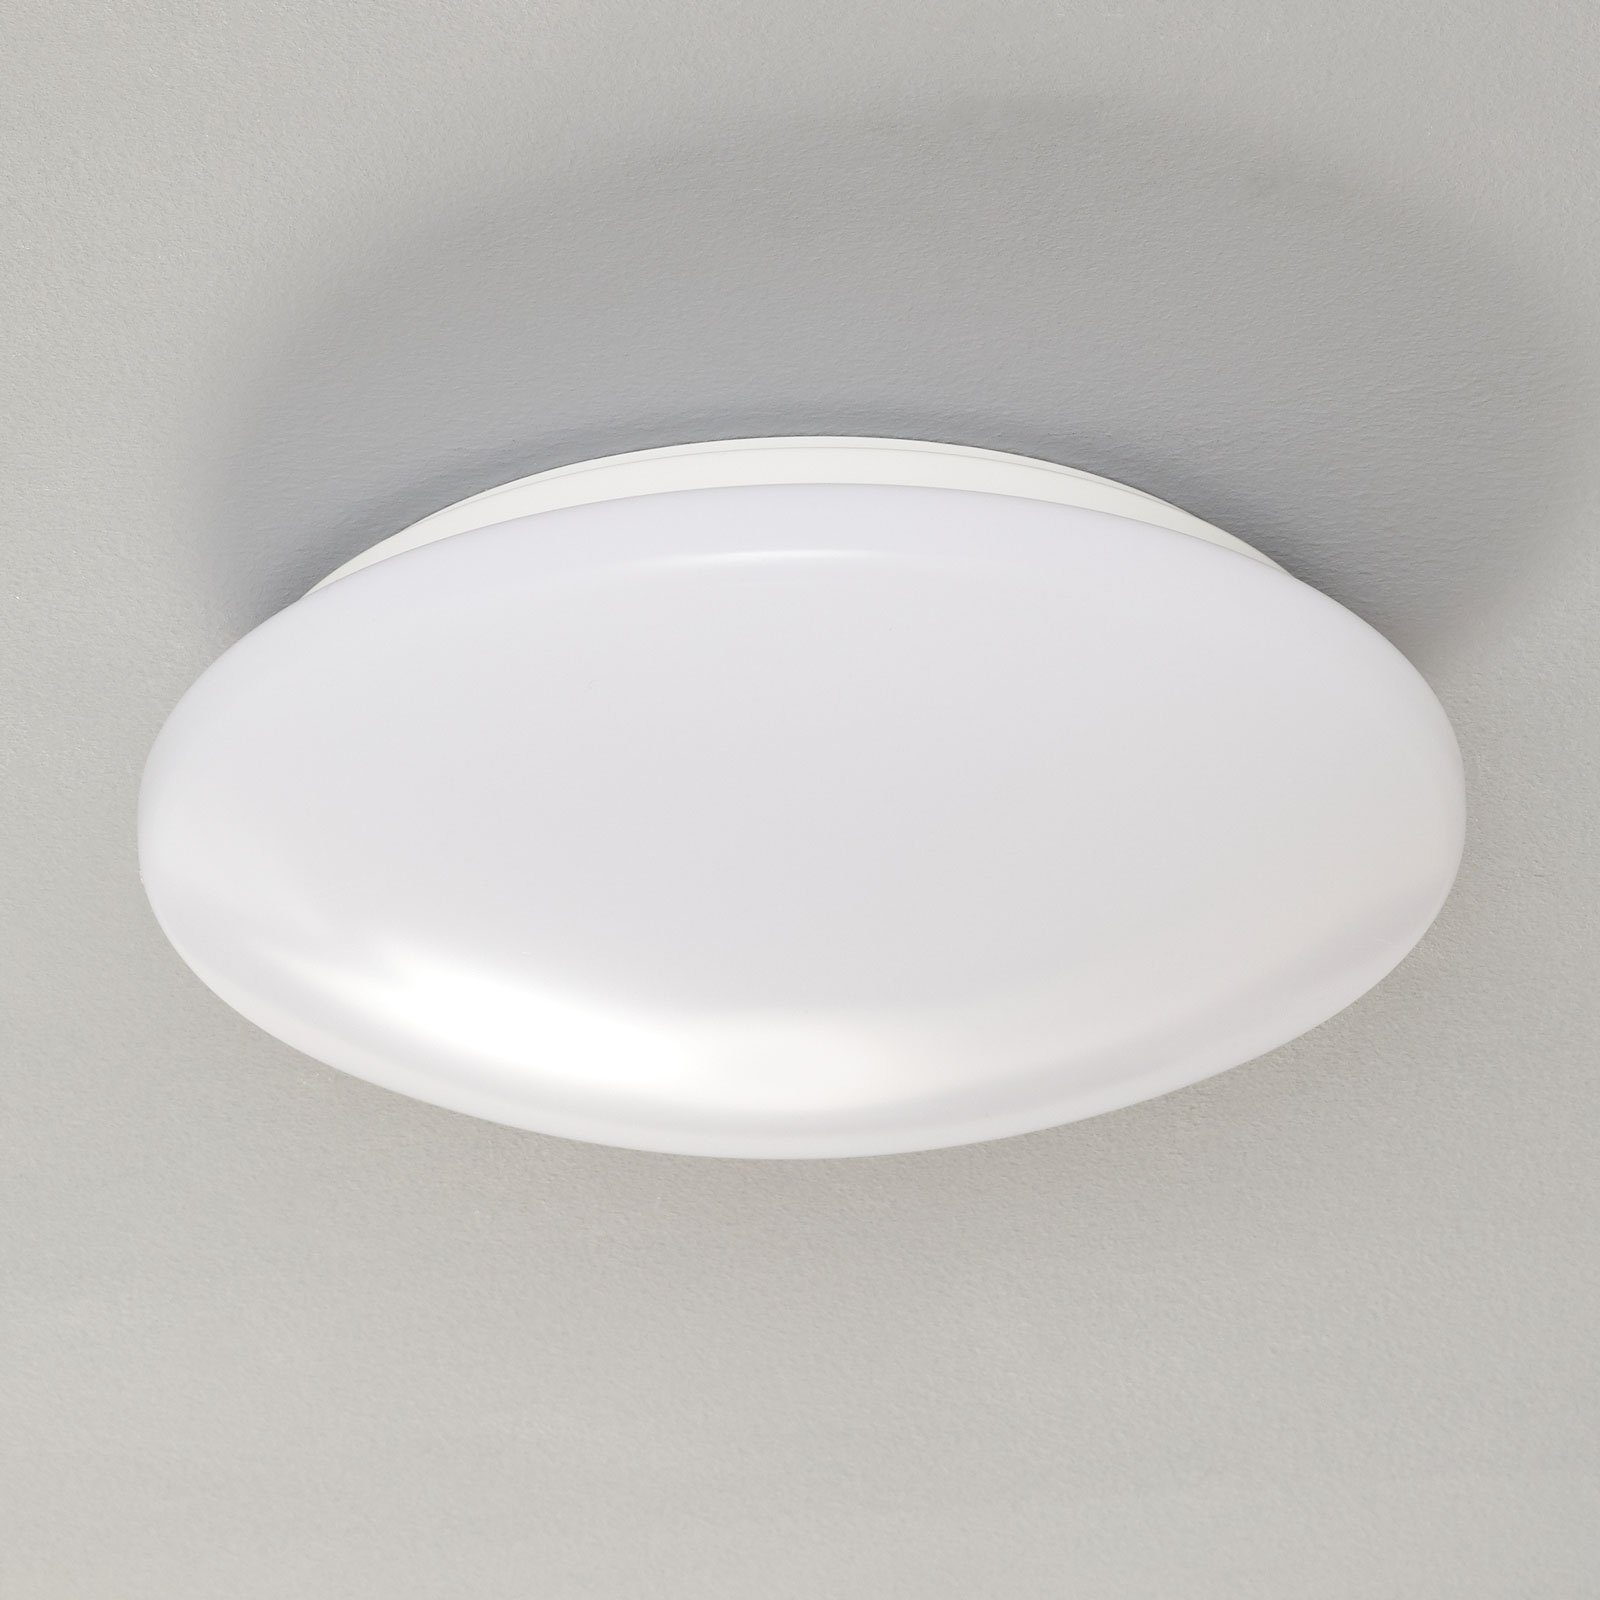 Pollux plafondlamp, Ø 27 cm, kunststof, bewegingsmelder